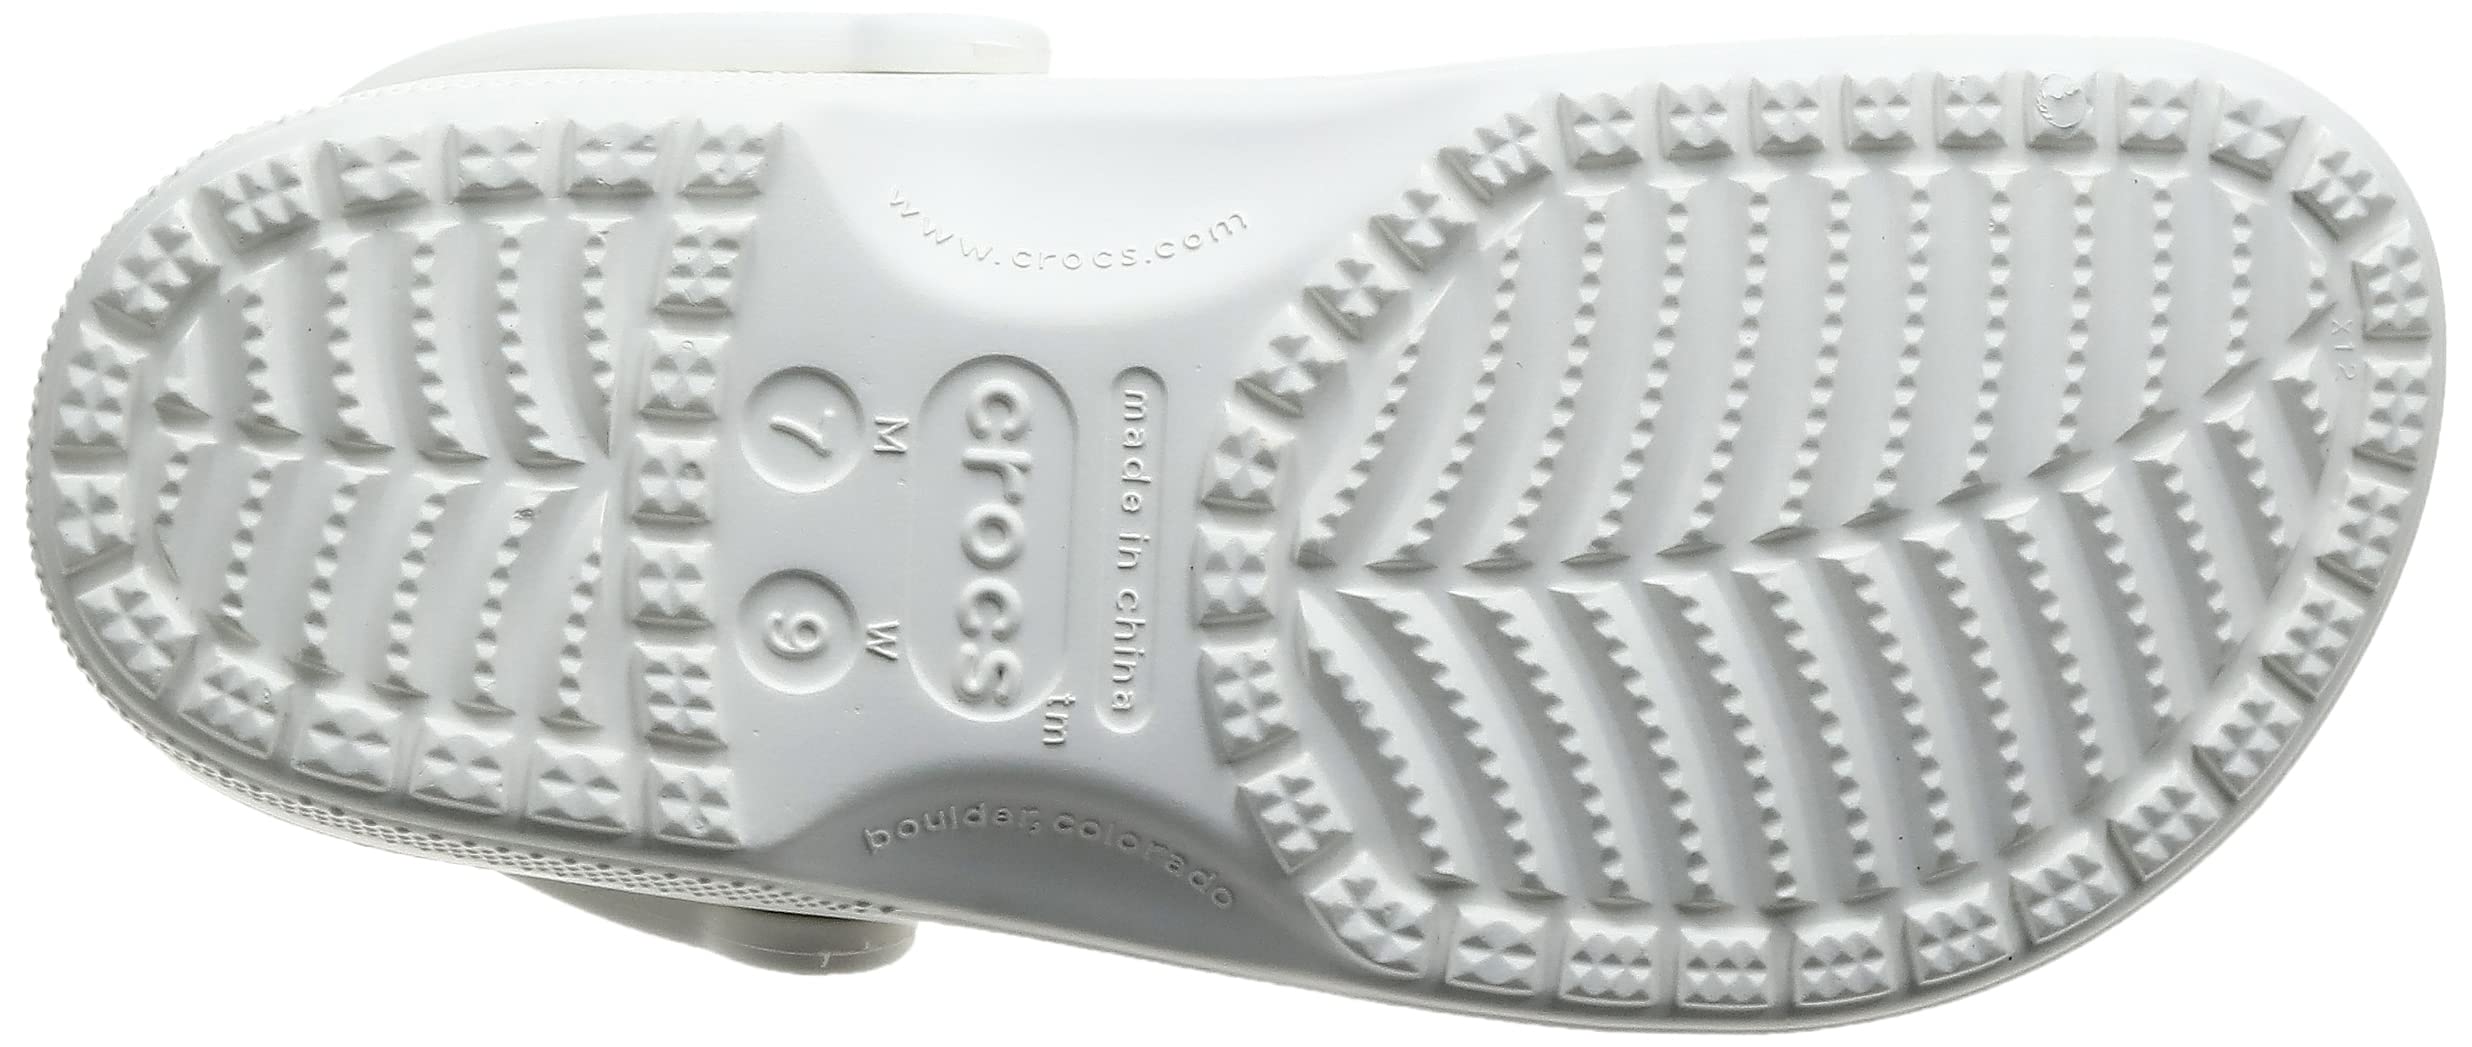 Crocs Unisex Adults Classic Clog Shower Beach Lightweight Water Shoes - White - M11